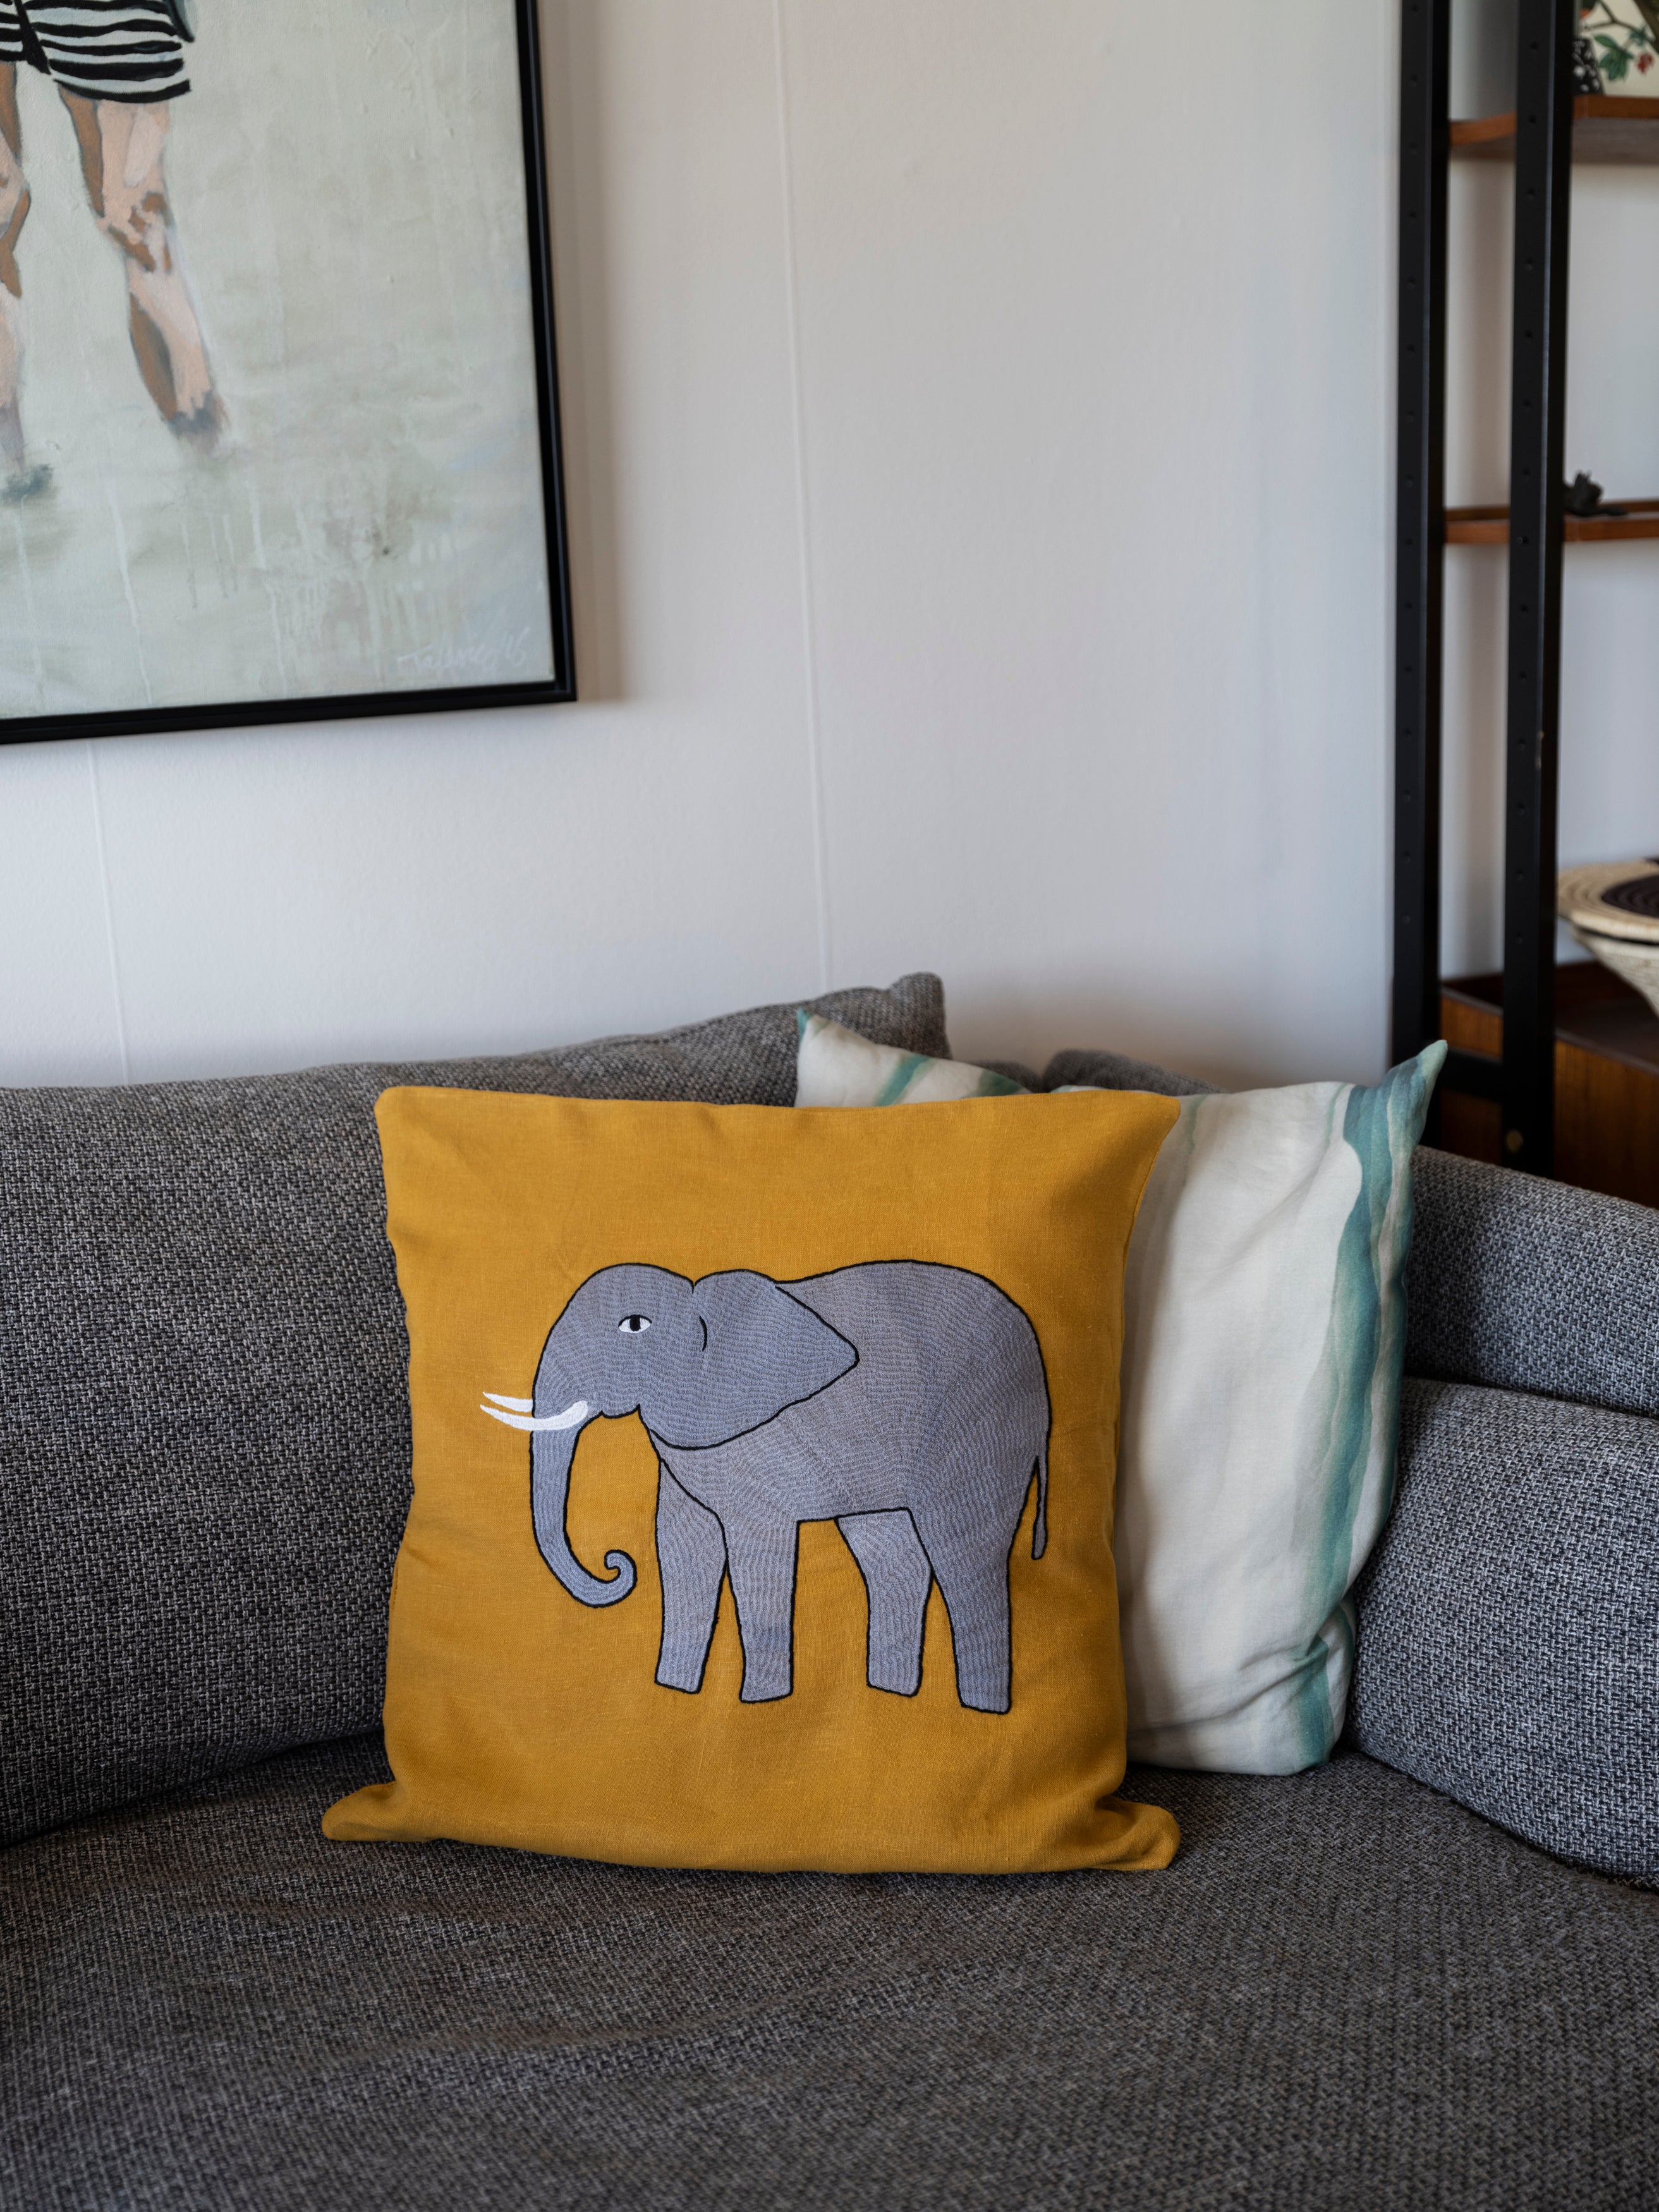 Elephant pillow on yellow linen